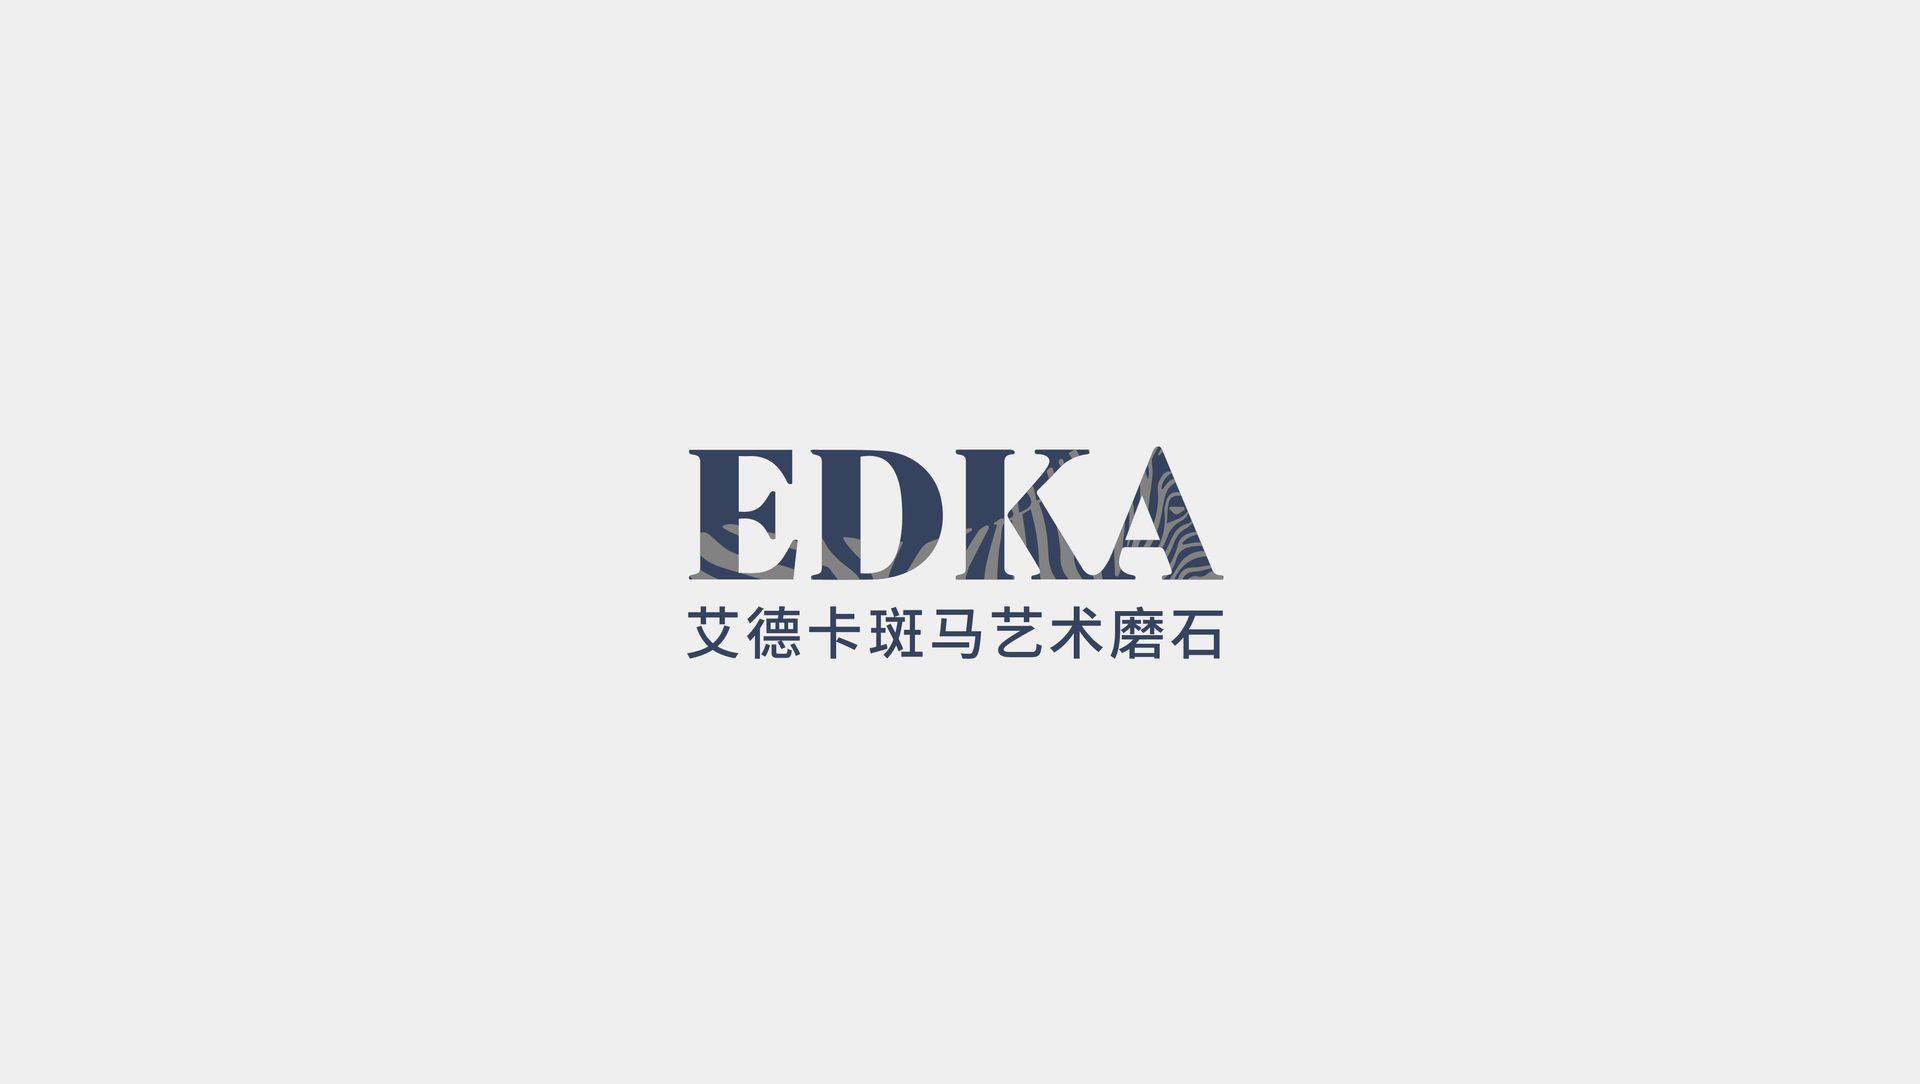 EDKA - brand identity package